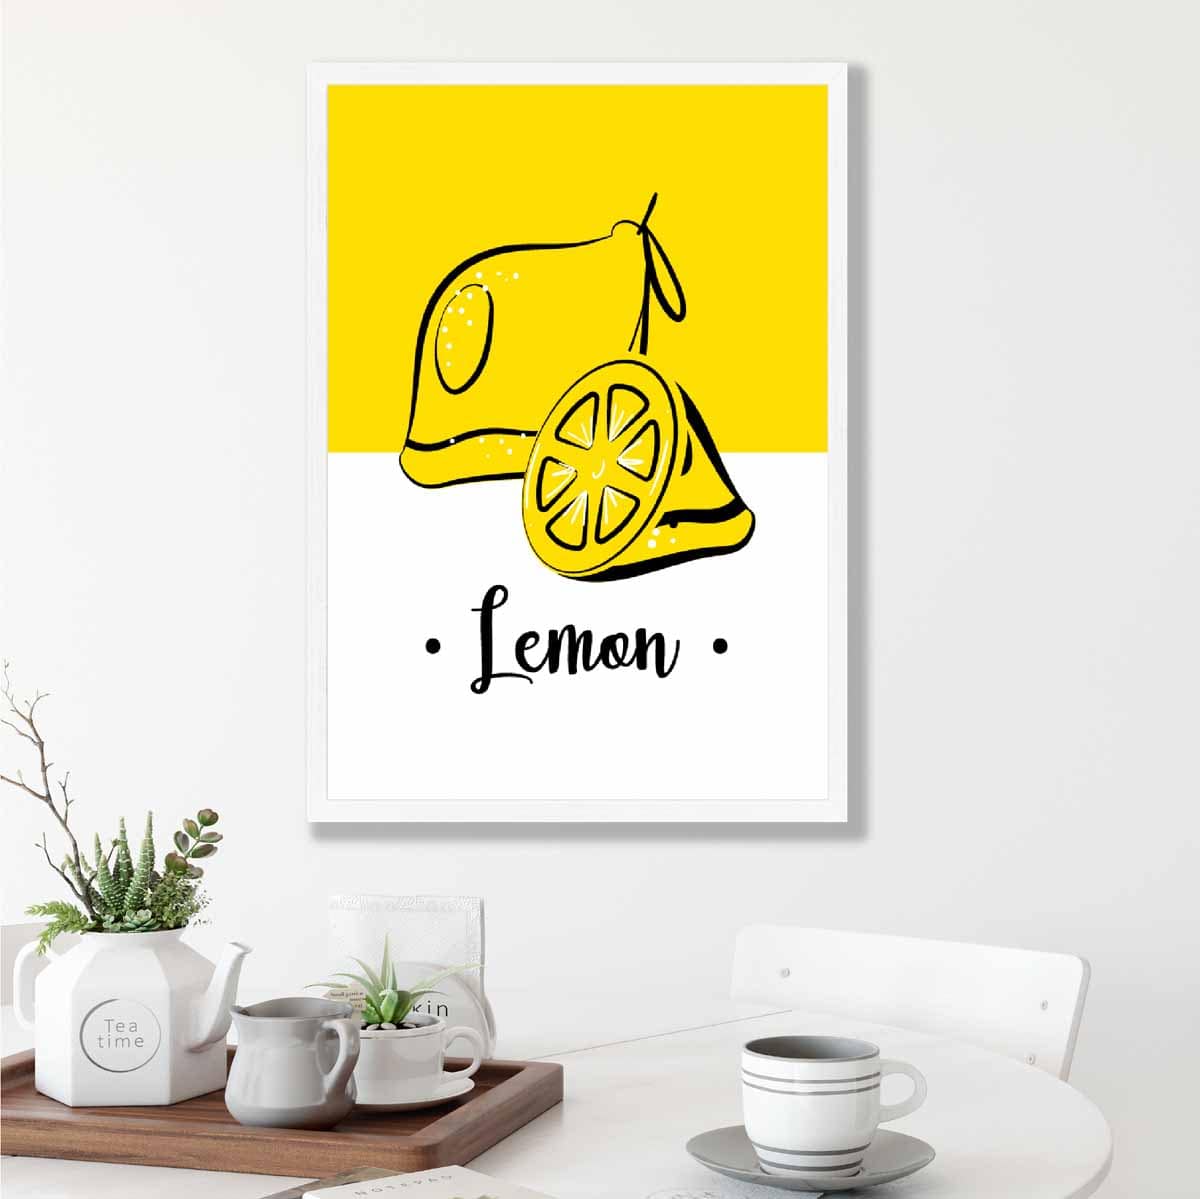 Sketch Fruit Poster of Lemons in Yellow